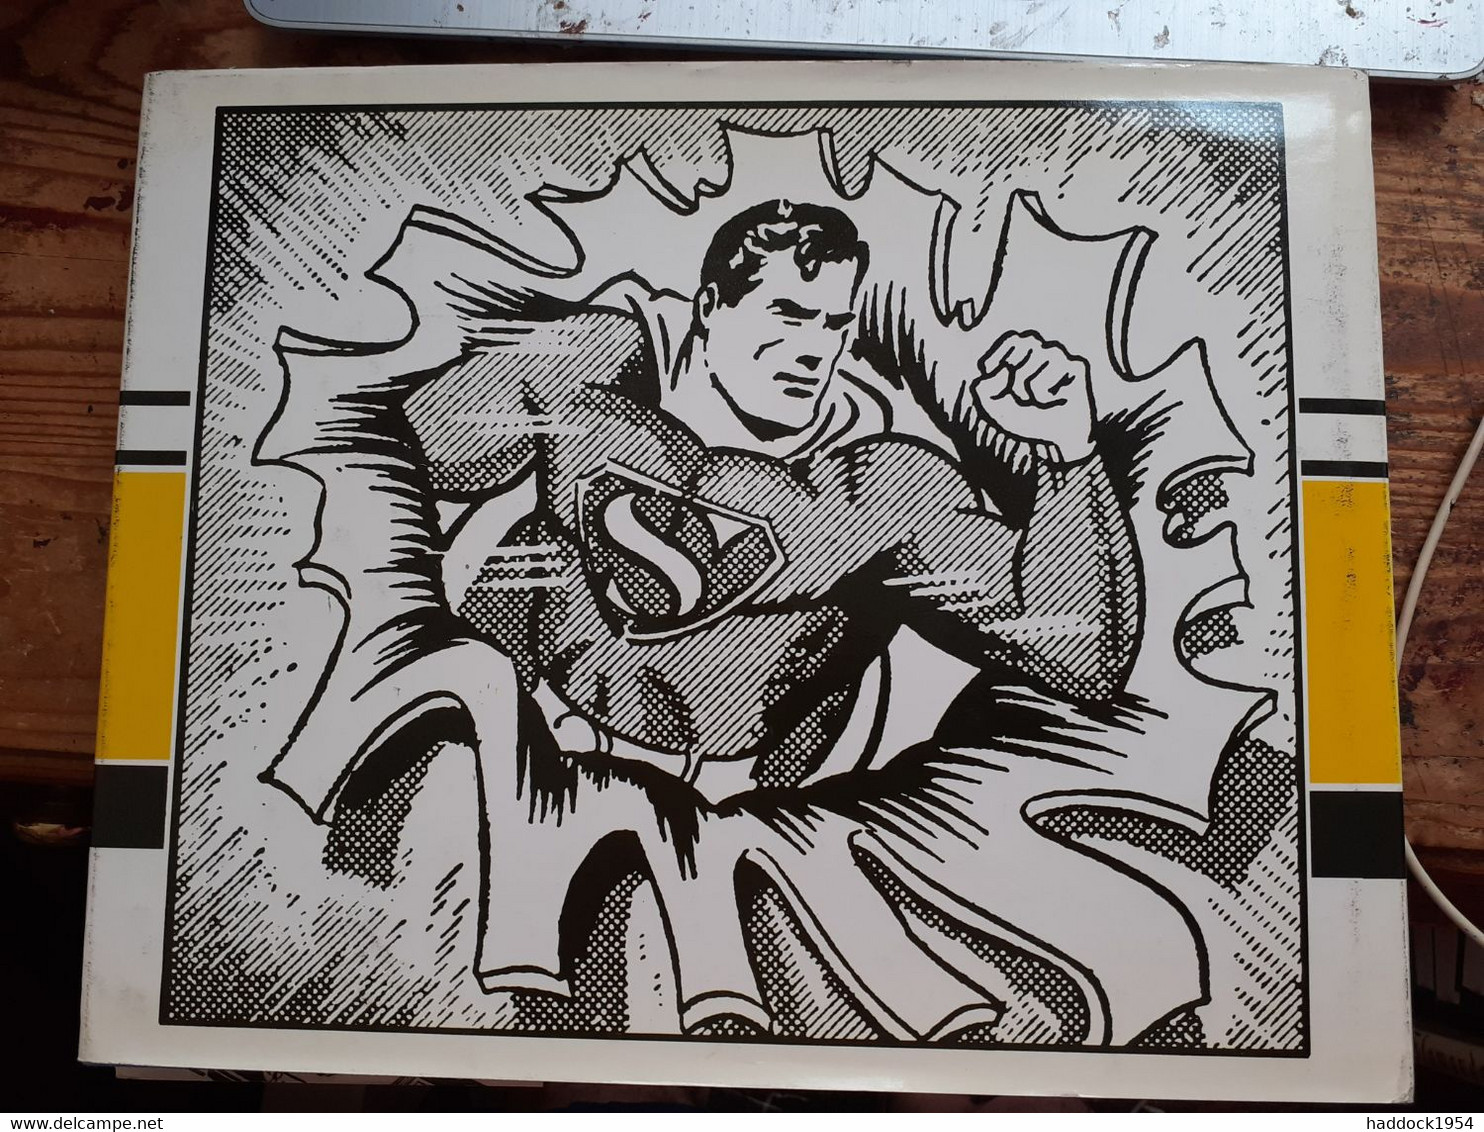 Superman 1941-1941  Volume 3 JERRY SIEGEL JOE SCHUSTER Futuropolis 1983 - Superman